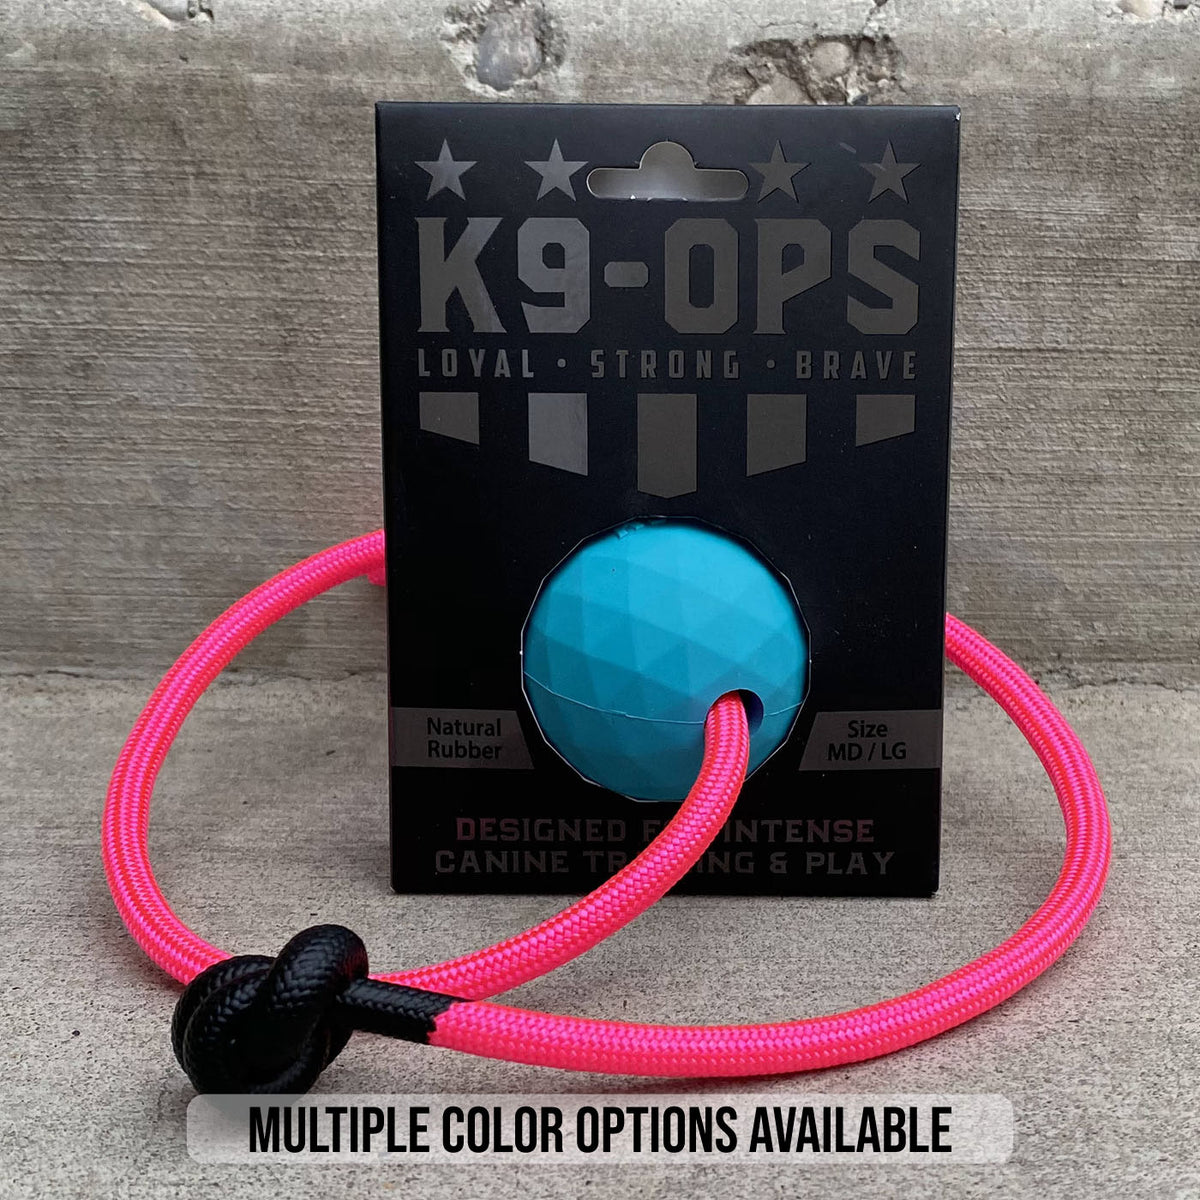 indestructible dog chew toy ball blue k9ops k9 opsbox